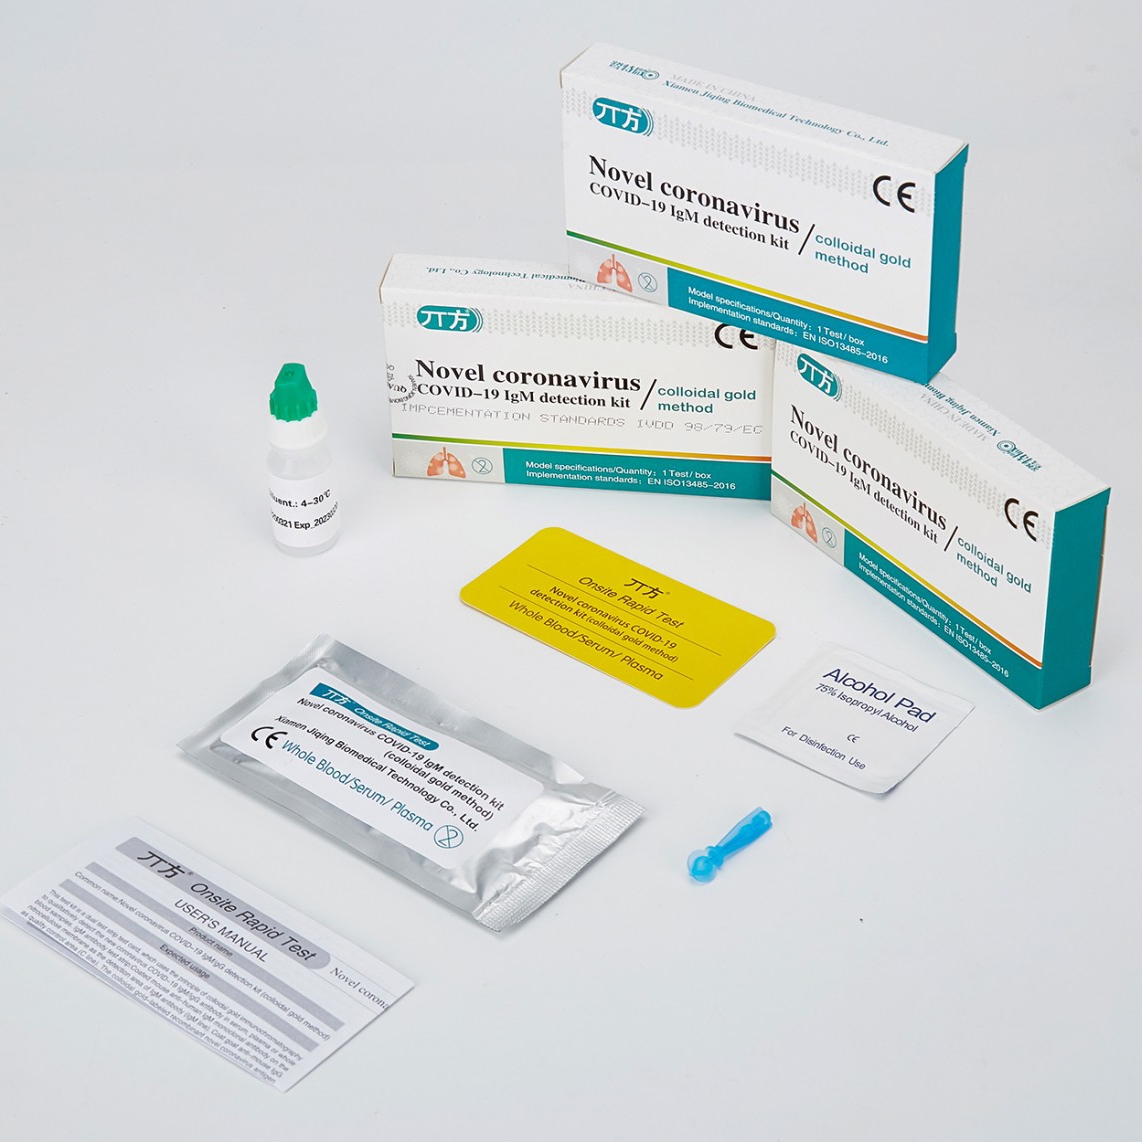 COVID-19 onsite rapid test kit coronavirus  IgM detection kit (colloidal gold method)